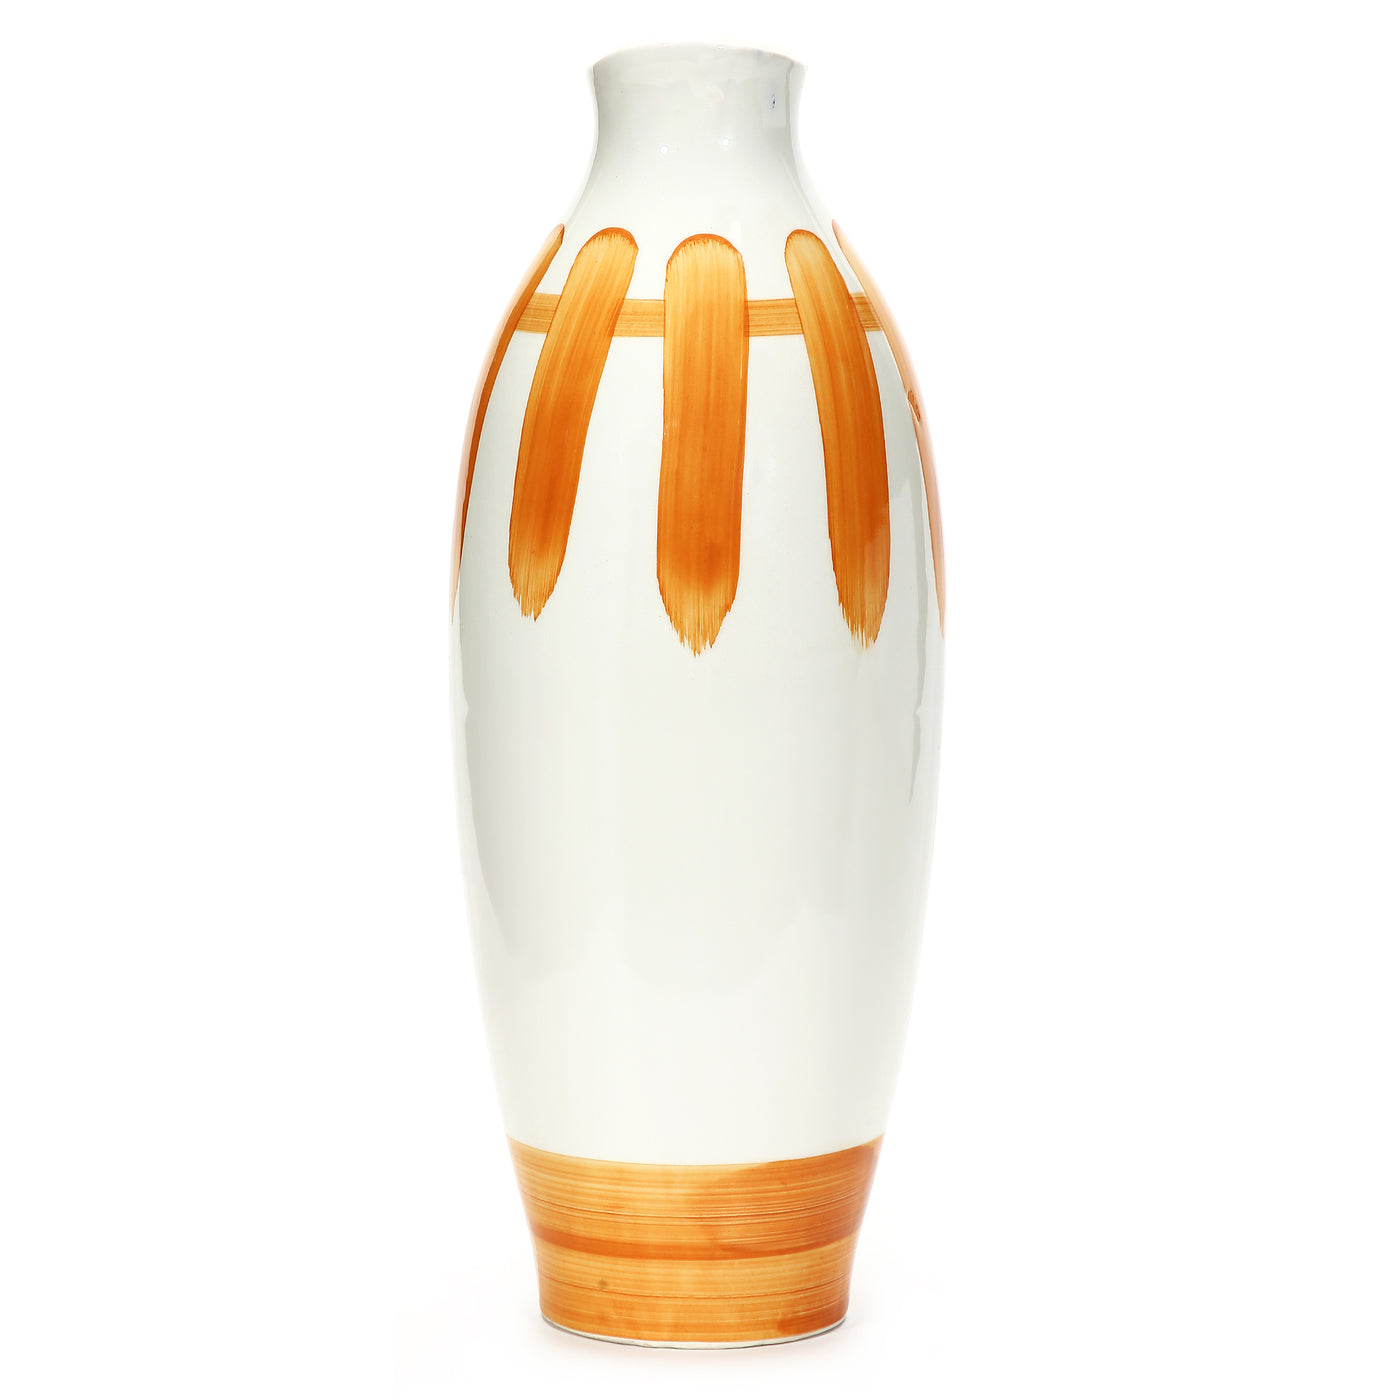 Amalfiee Orange & White Artistic Studio Pottery Handmade Ceramic Jug Vase